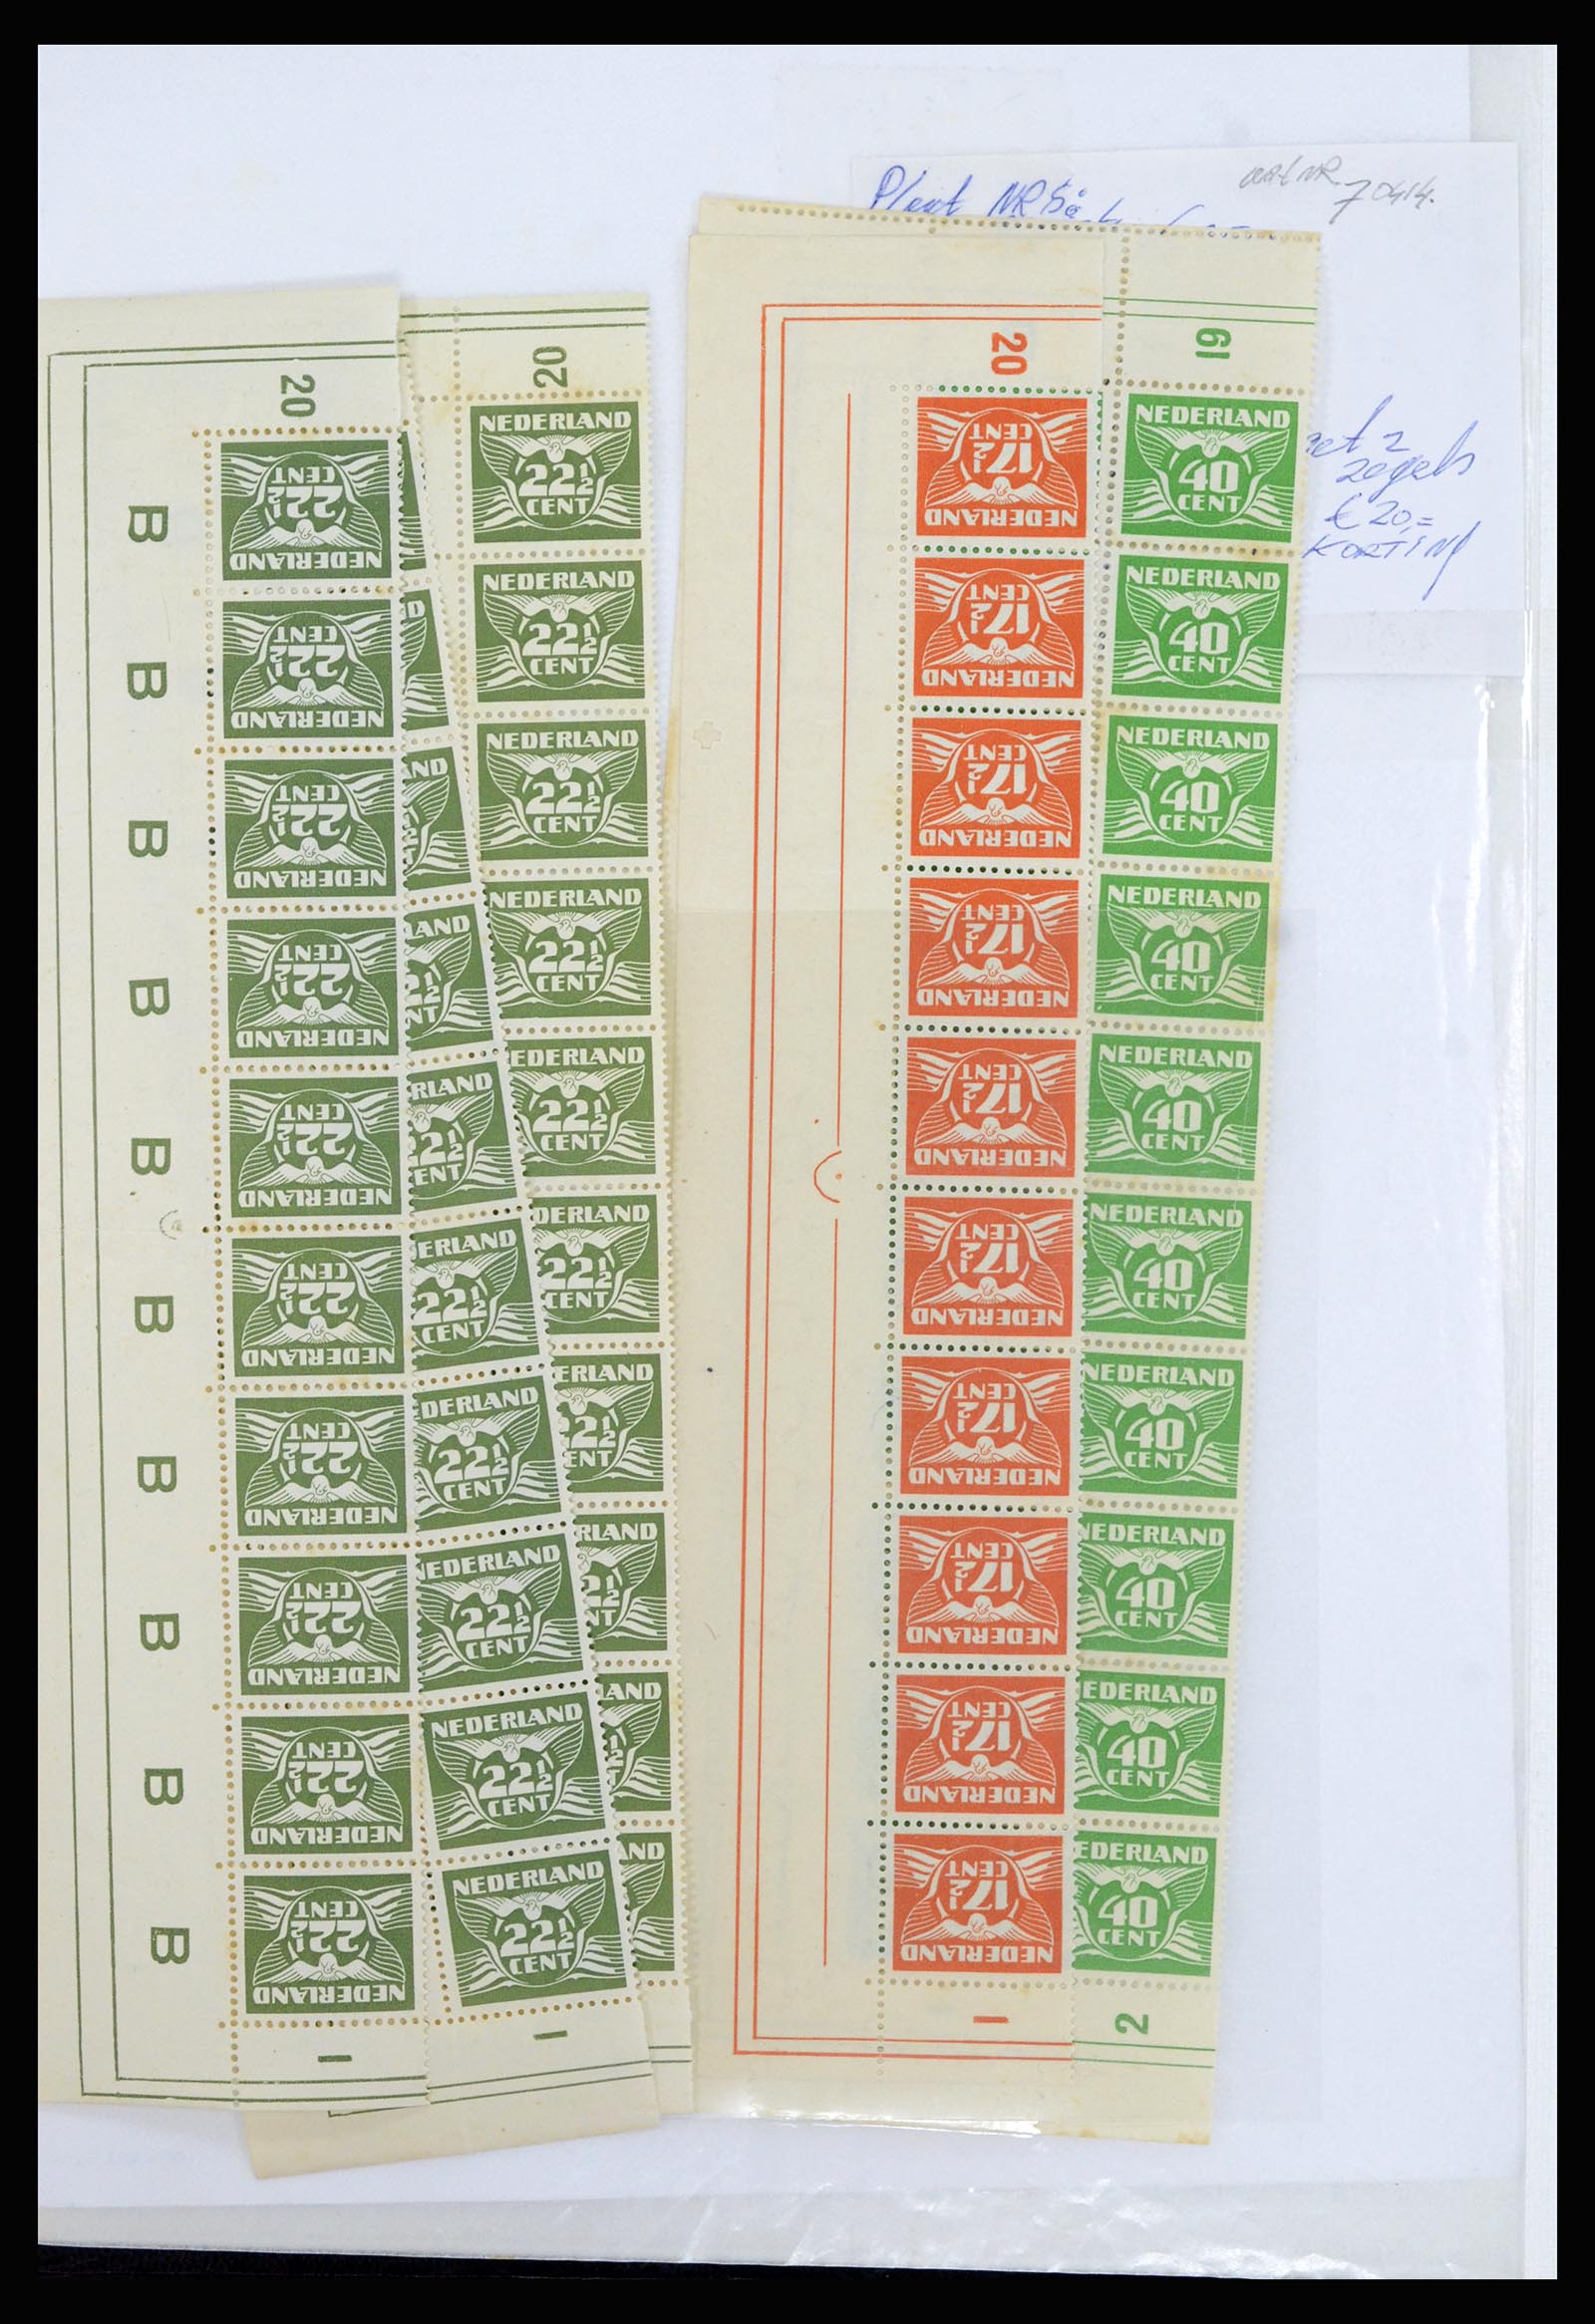 36838 005 - Stamp collection 36838 Netherlands sheet margin specialties 1906-1948.